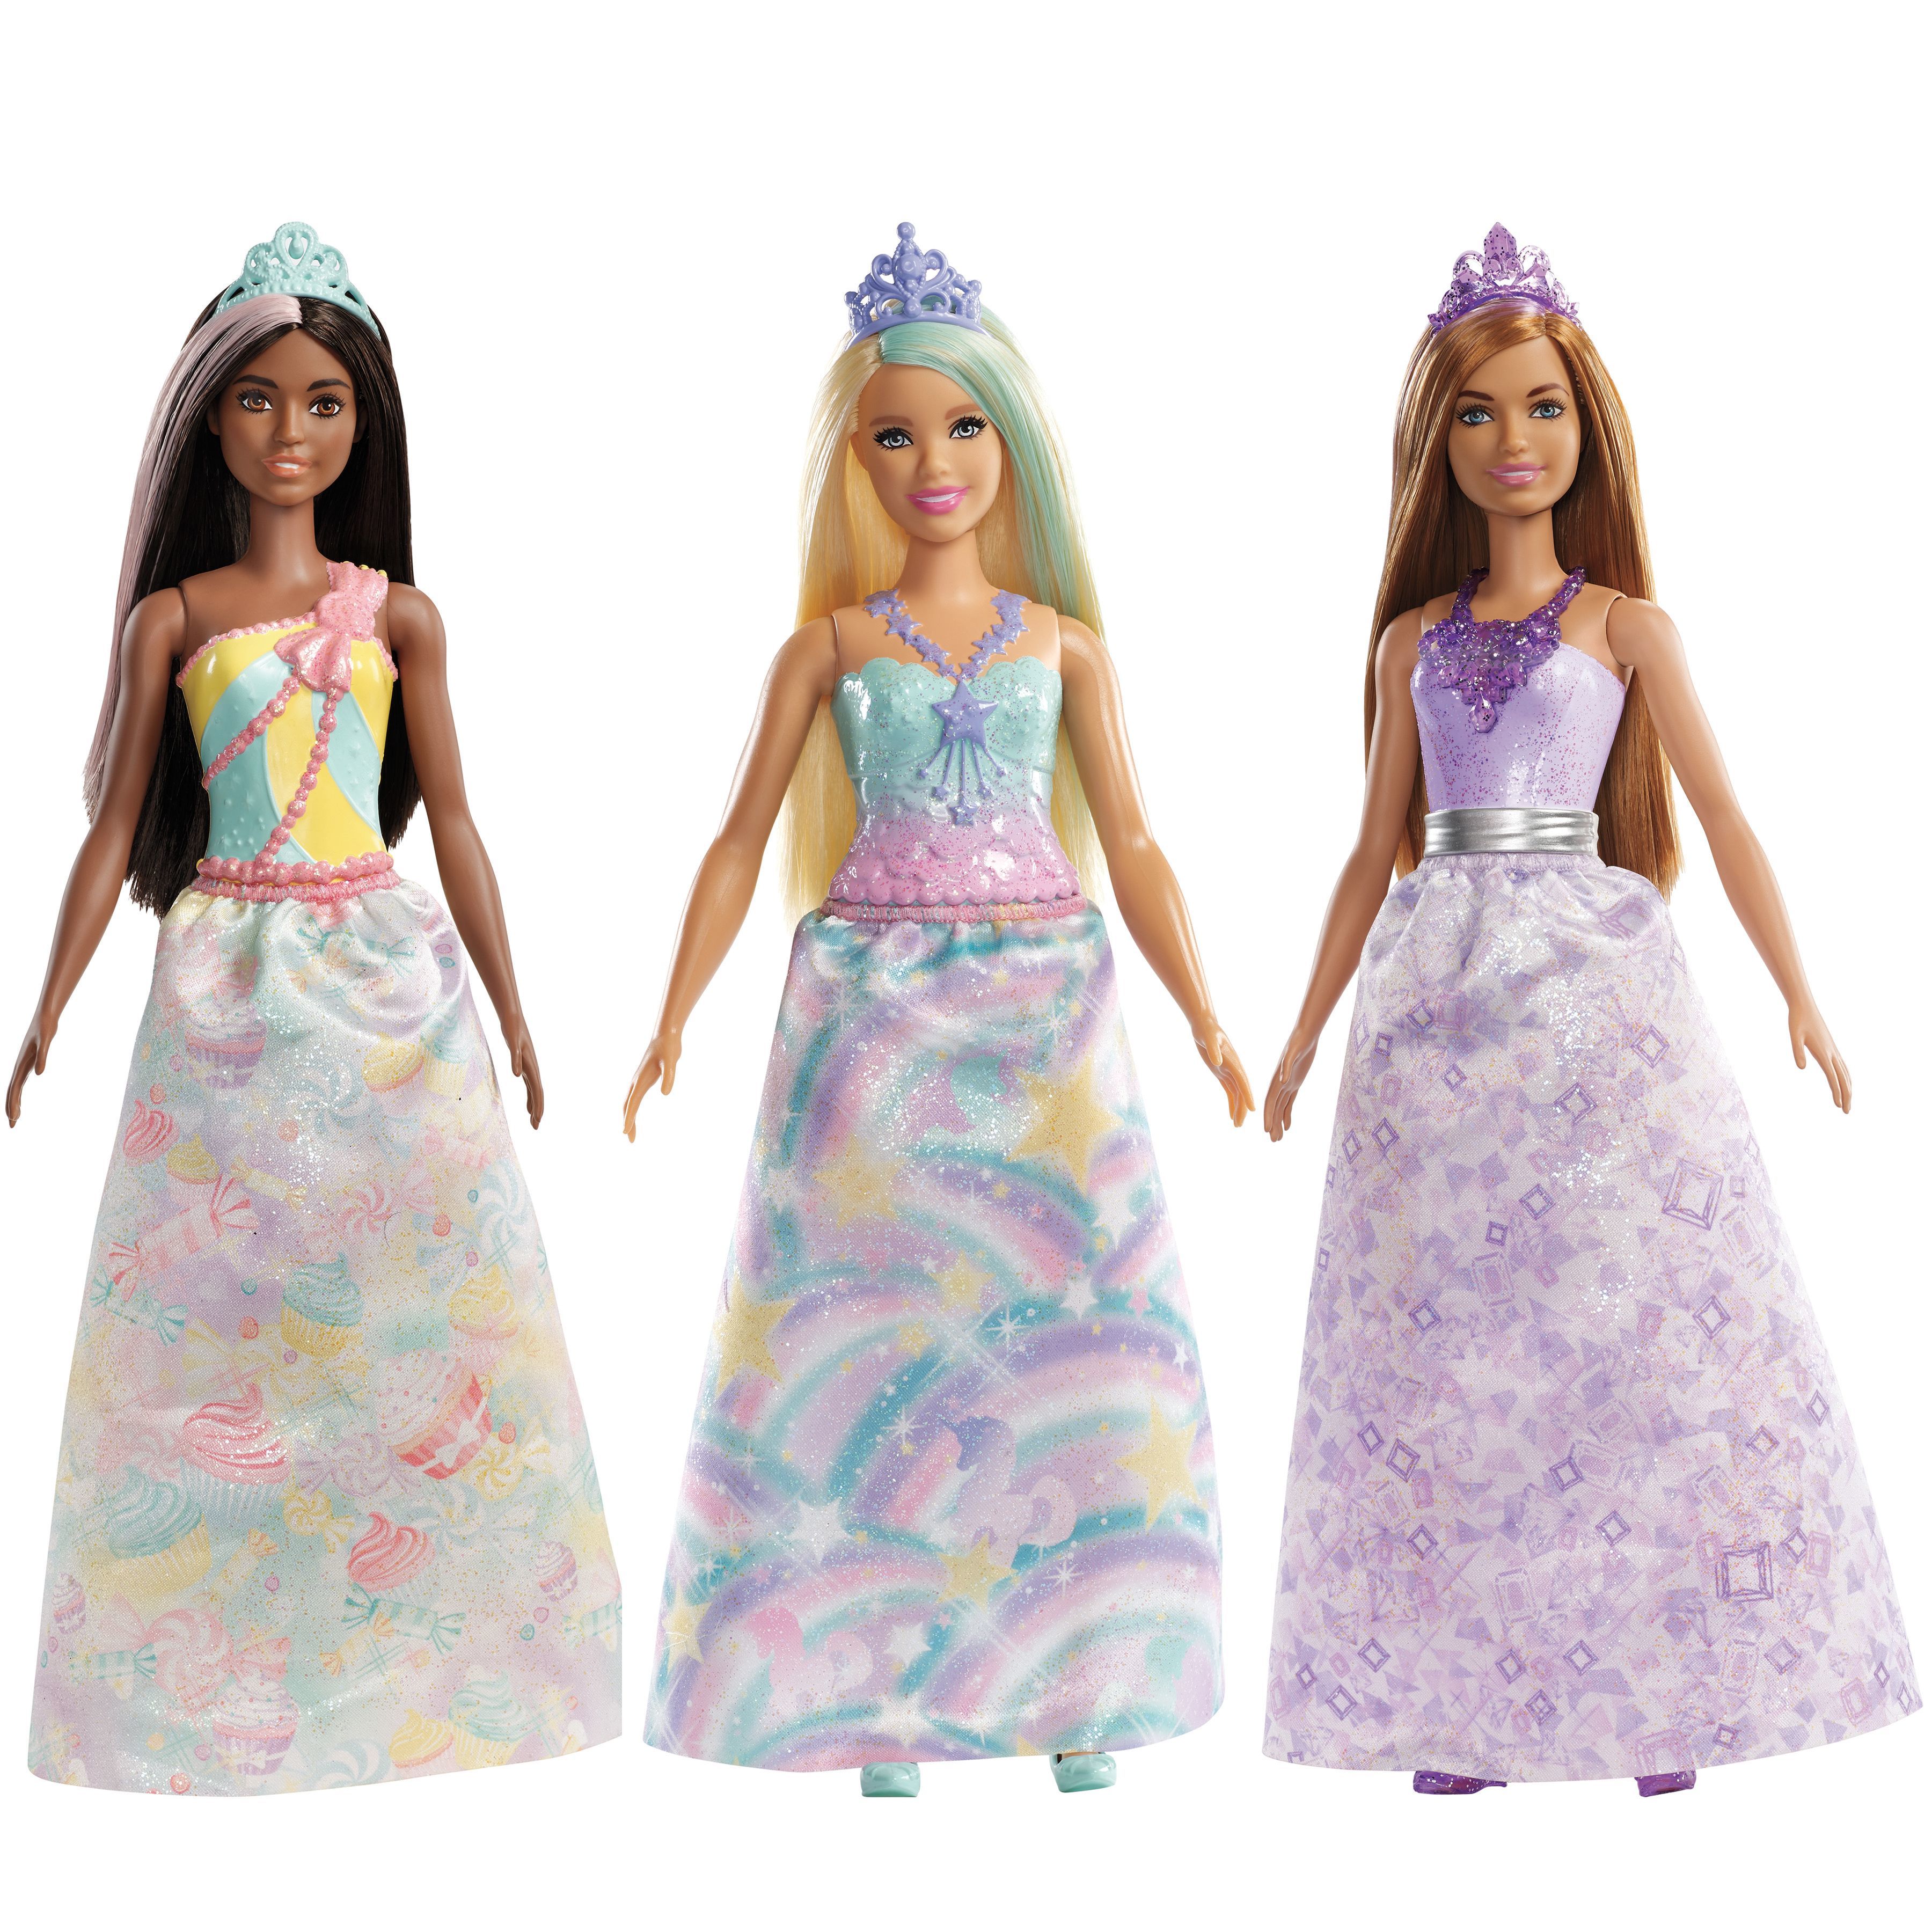 Принцессы 28. Барби Дримтопия кукла. Куклы Дримтопия принцесса. Кукла Маттель Барби. Barbie Dreamtopia Princess Doll.